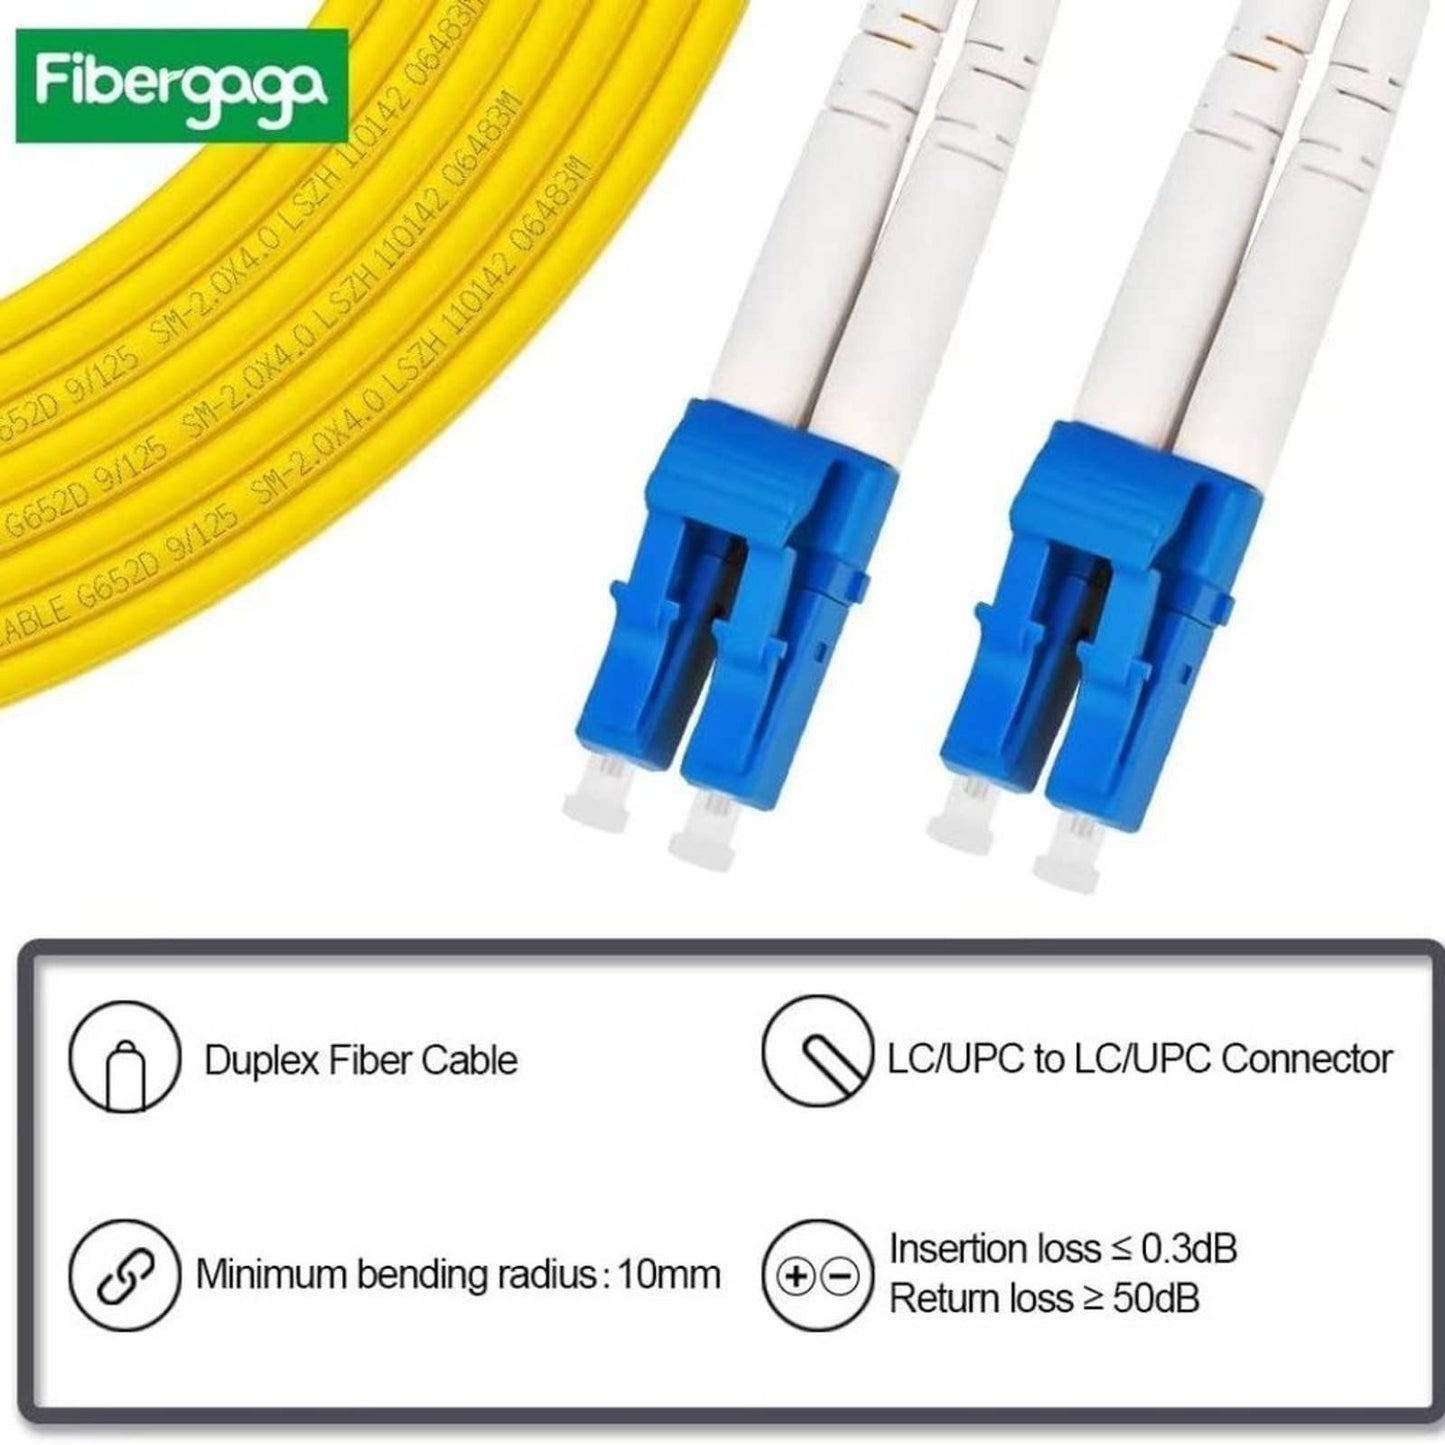 Fibergaga 3m(10ft) OS2 LC/UPC to LC/UPC Fiber Patch Cable Multimode Duplex